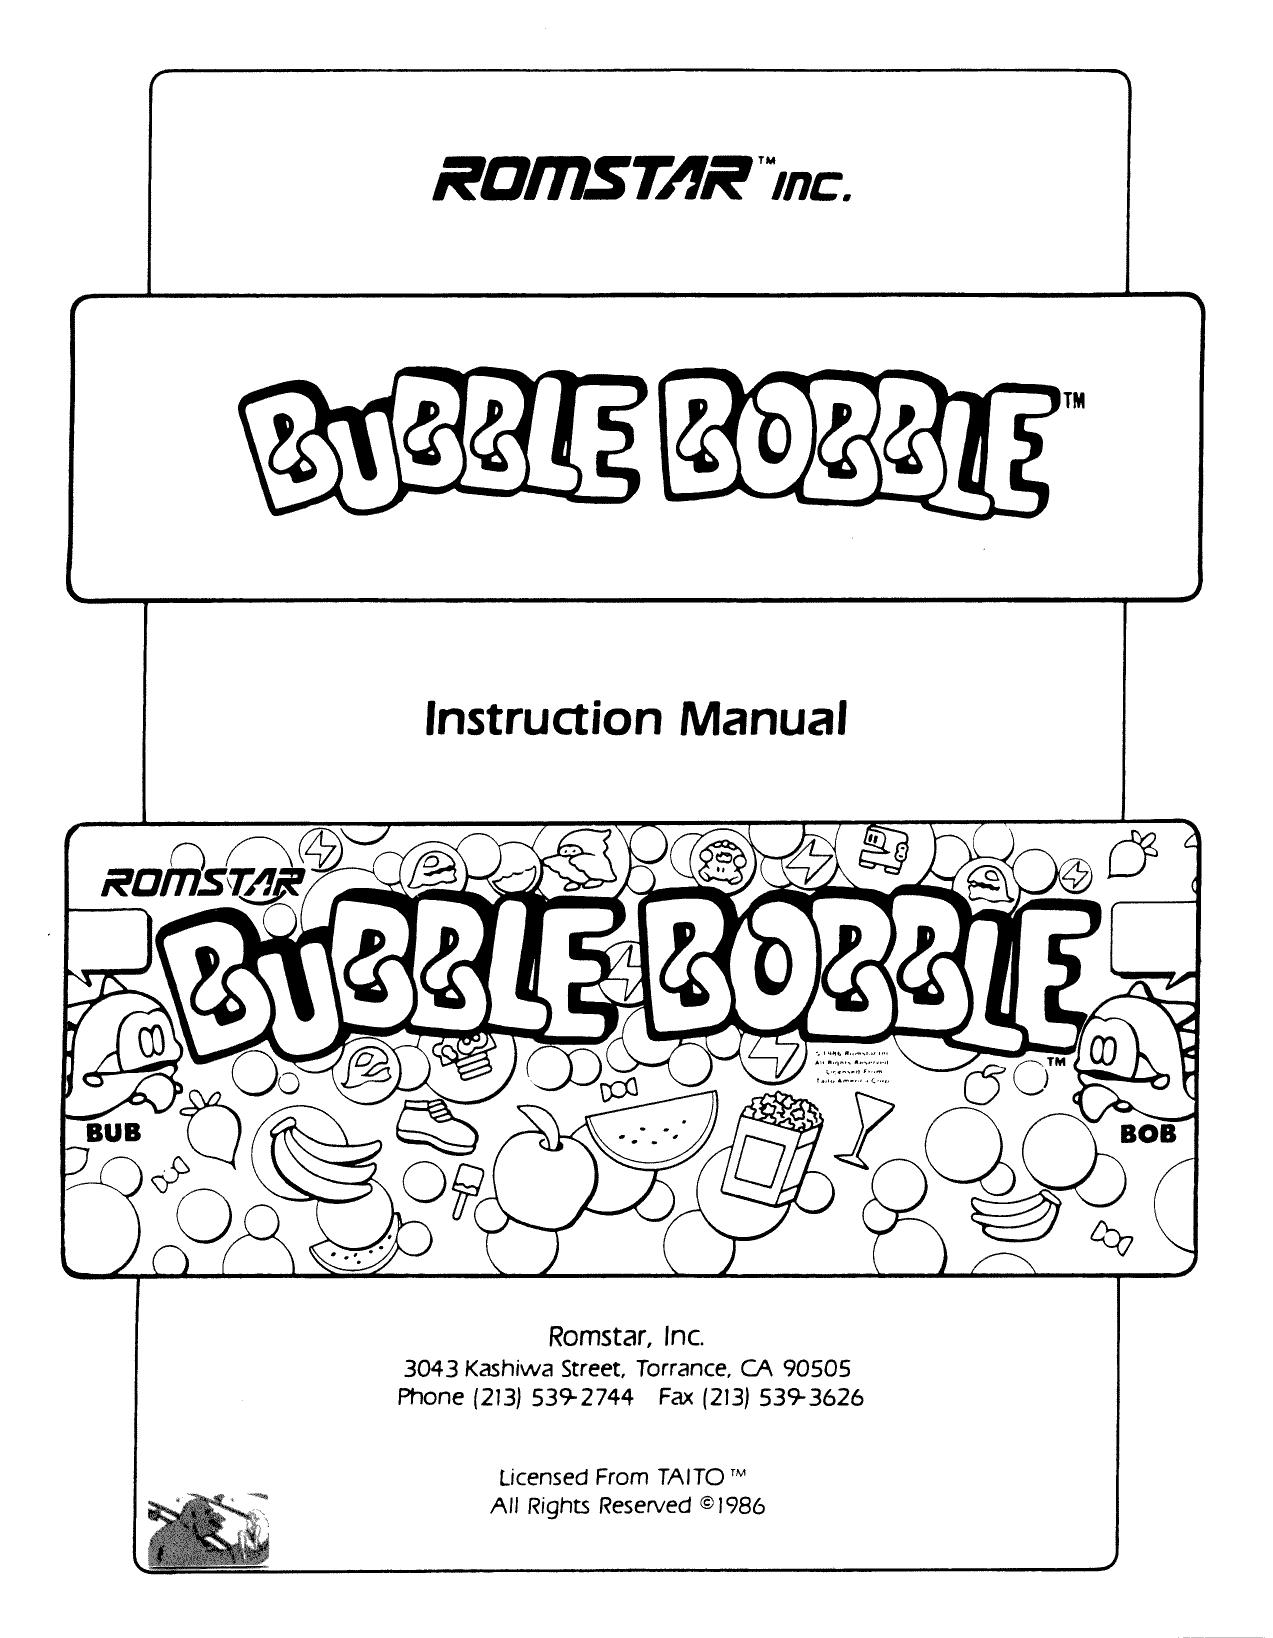 BubbleBobble Manual